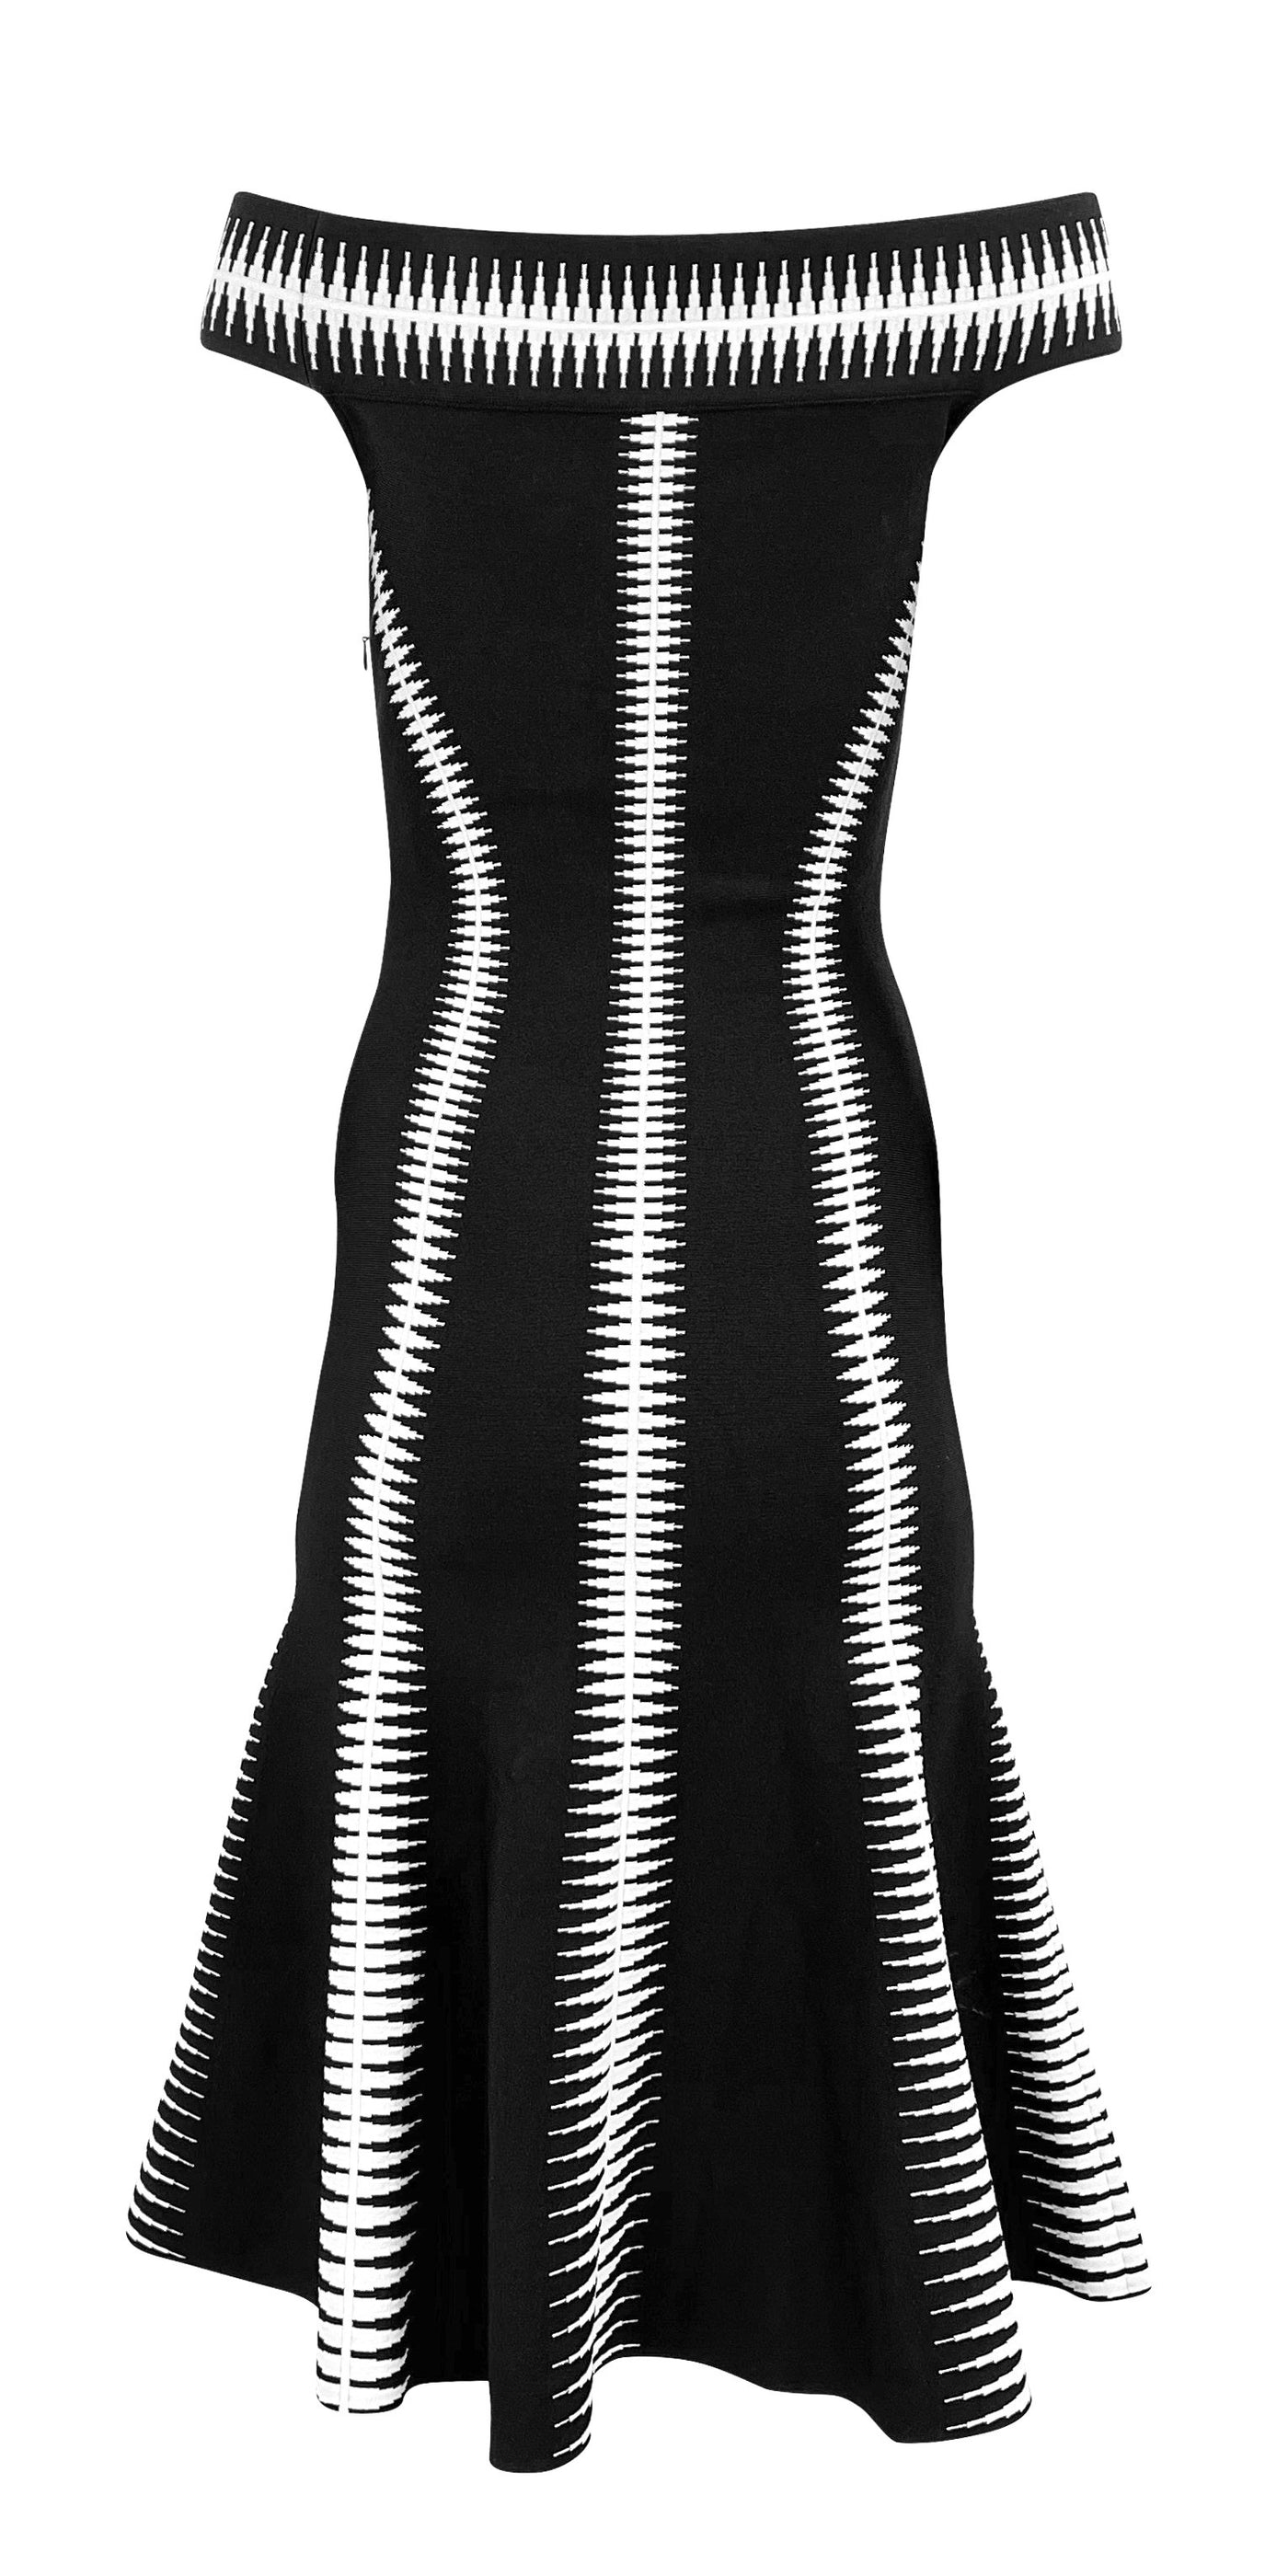 Alexander McQueen Spine Jacquard Off-The-Shoulder Dress in Black/Cream - Discounts on Alexander McQueen at UAL